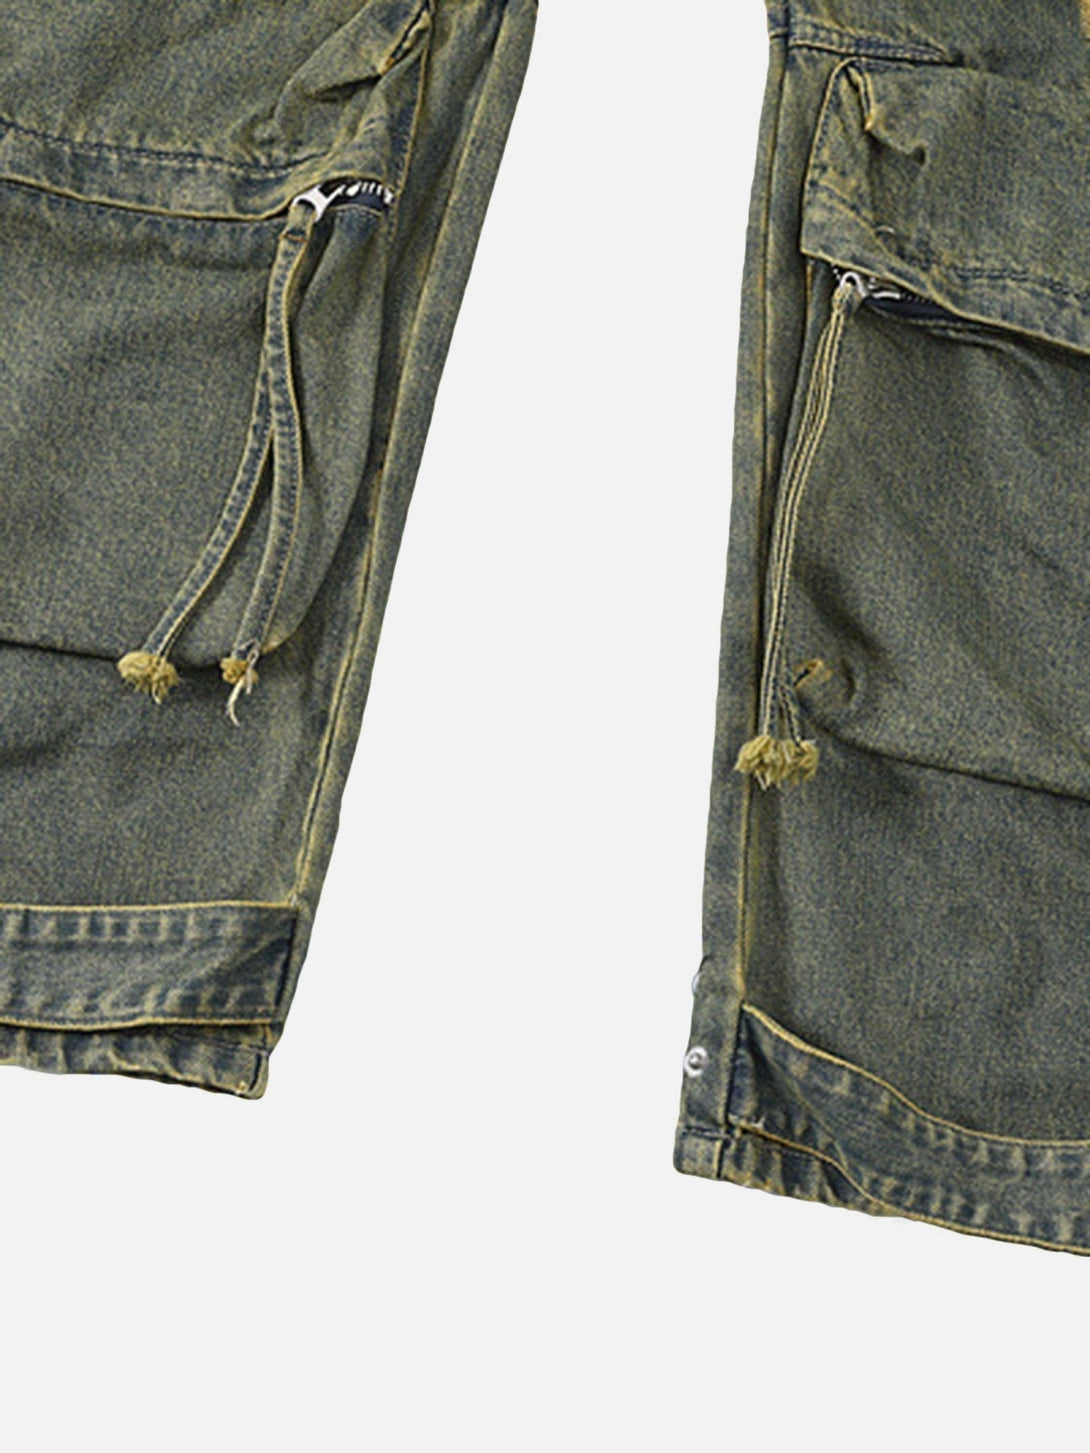 Majesda® - Multi-Pocket Workwear Loose Jeans - 1789- Outfit Ideas - Streetwear Fashion - majesda.com